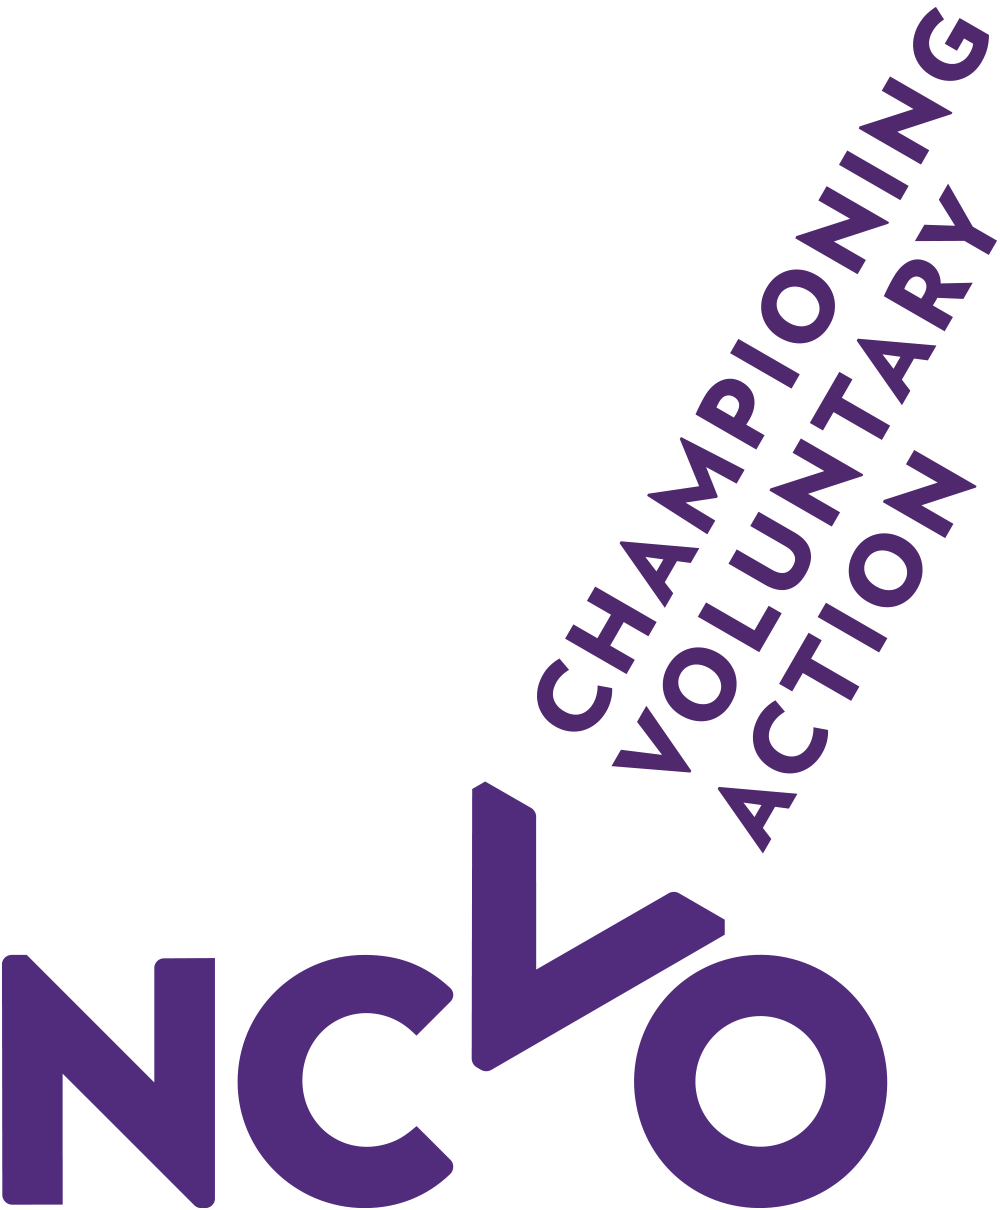 ncvo_logo_detail.png